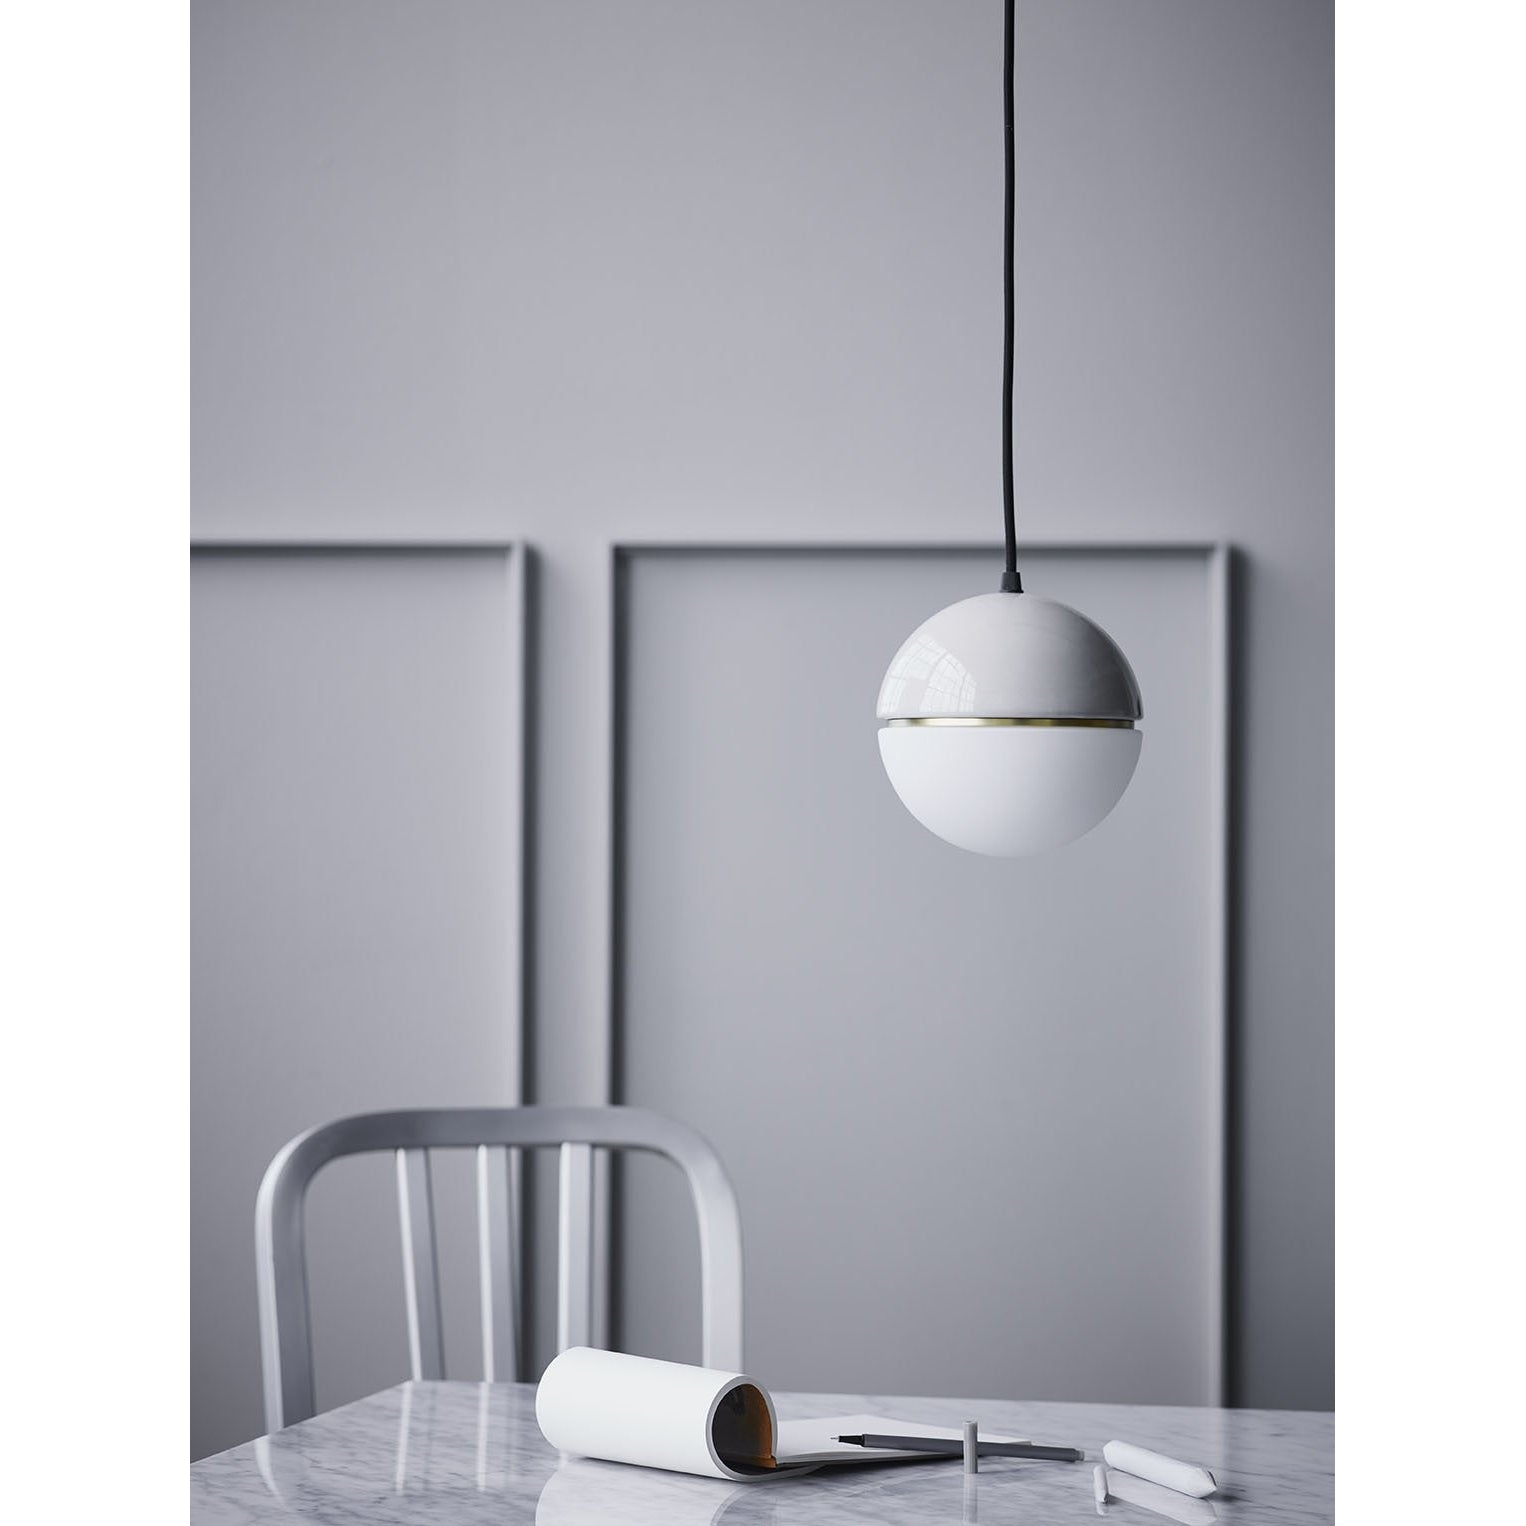 Lucie Kaas Macaroon Lámparas de color gris claro, Ø 16 cm